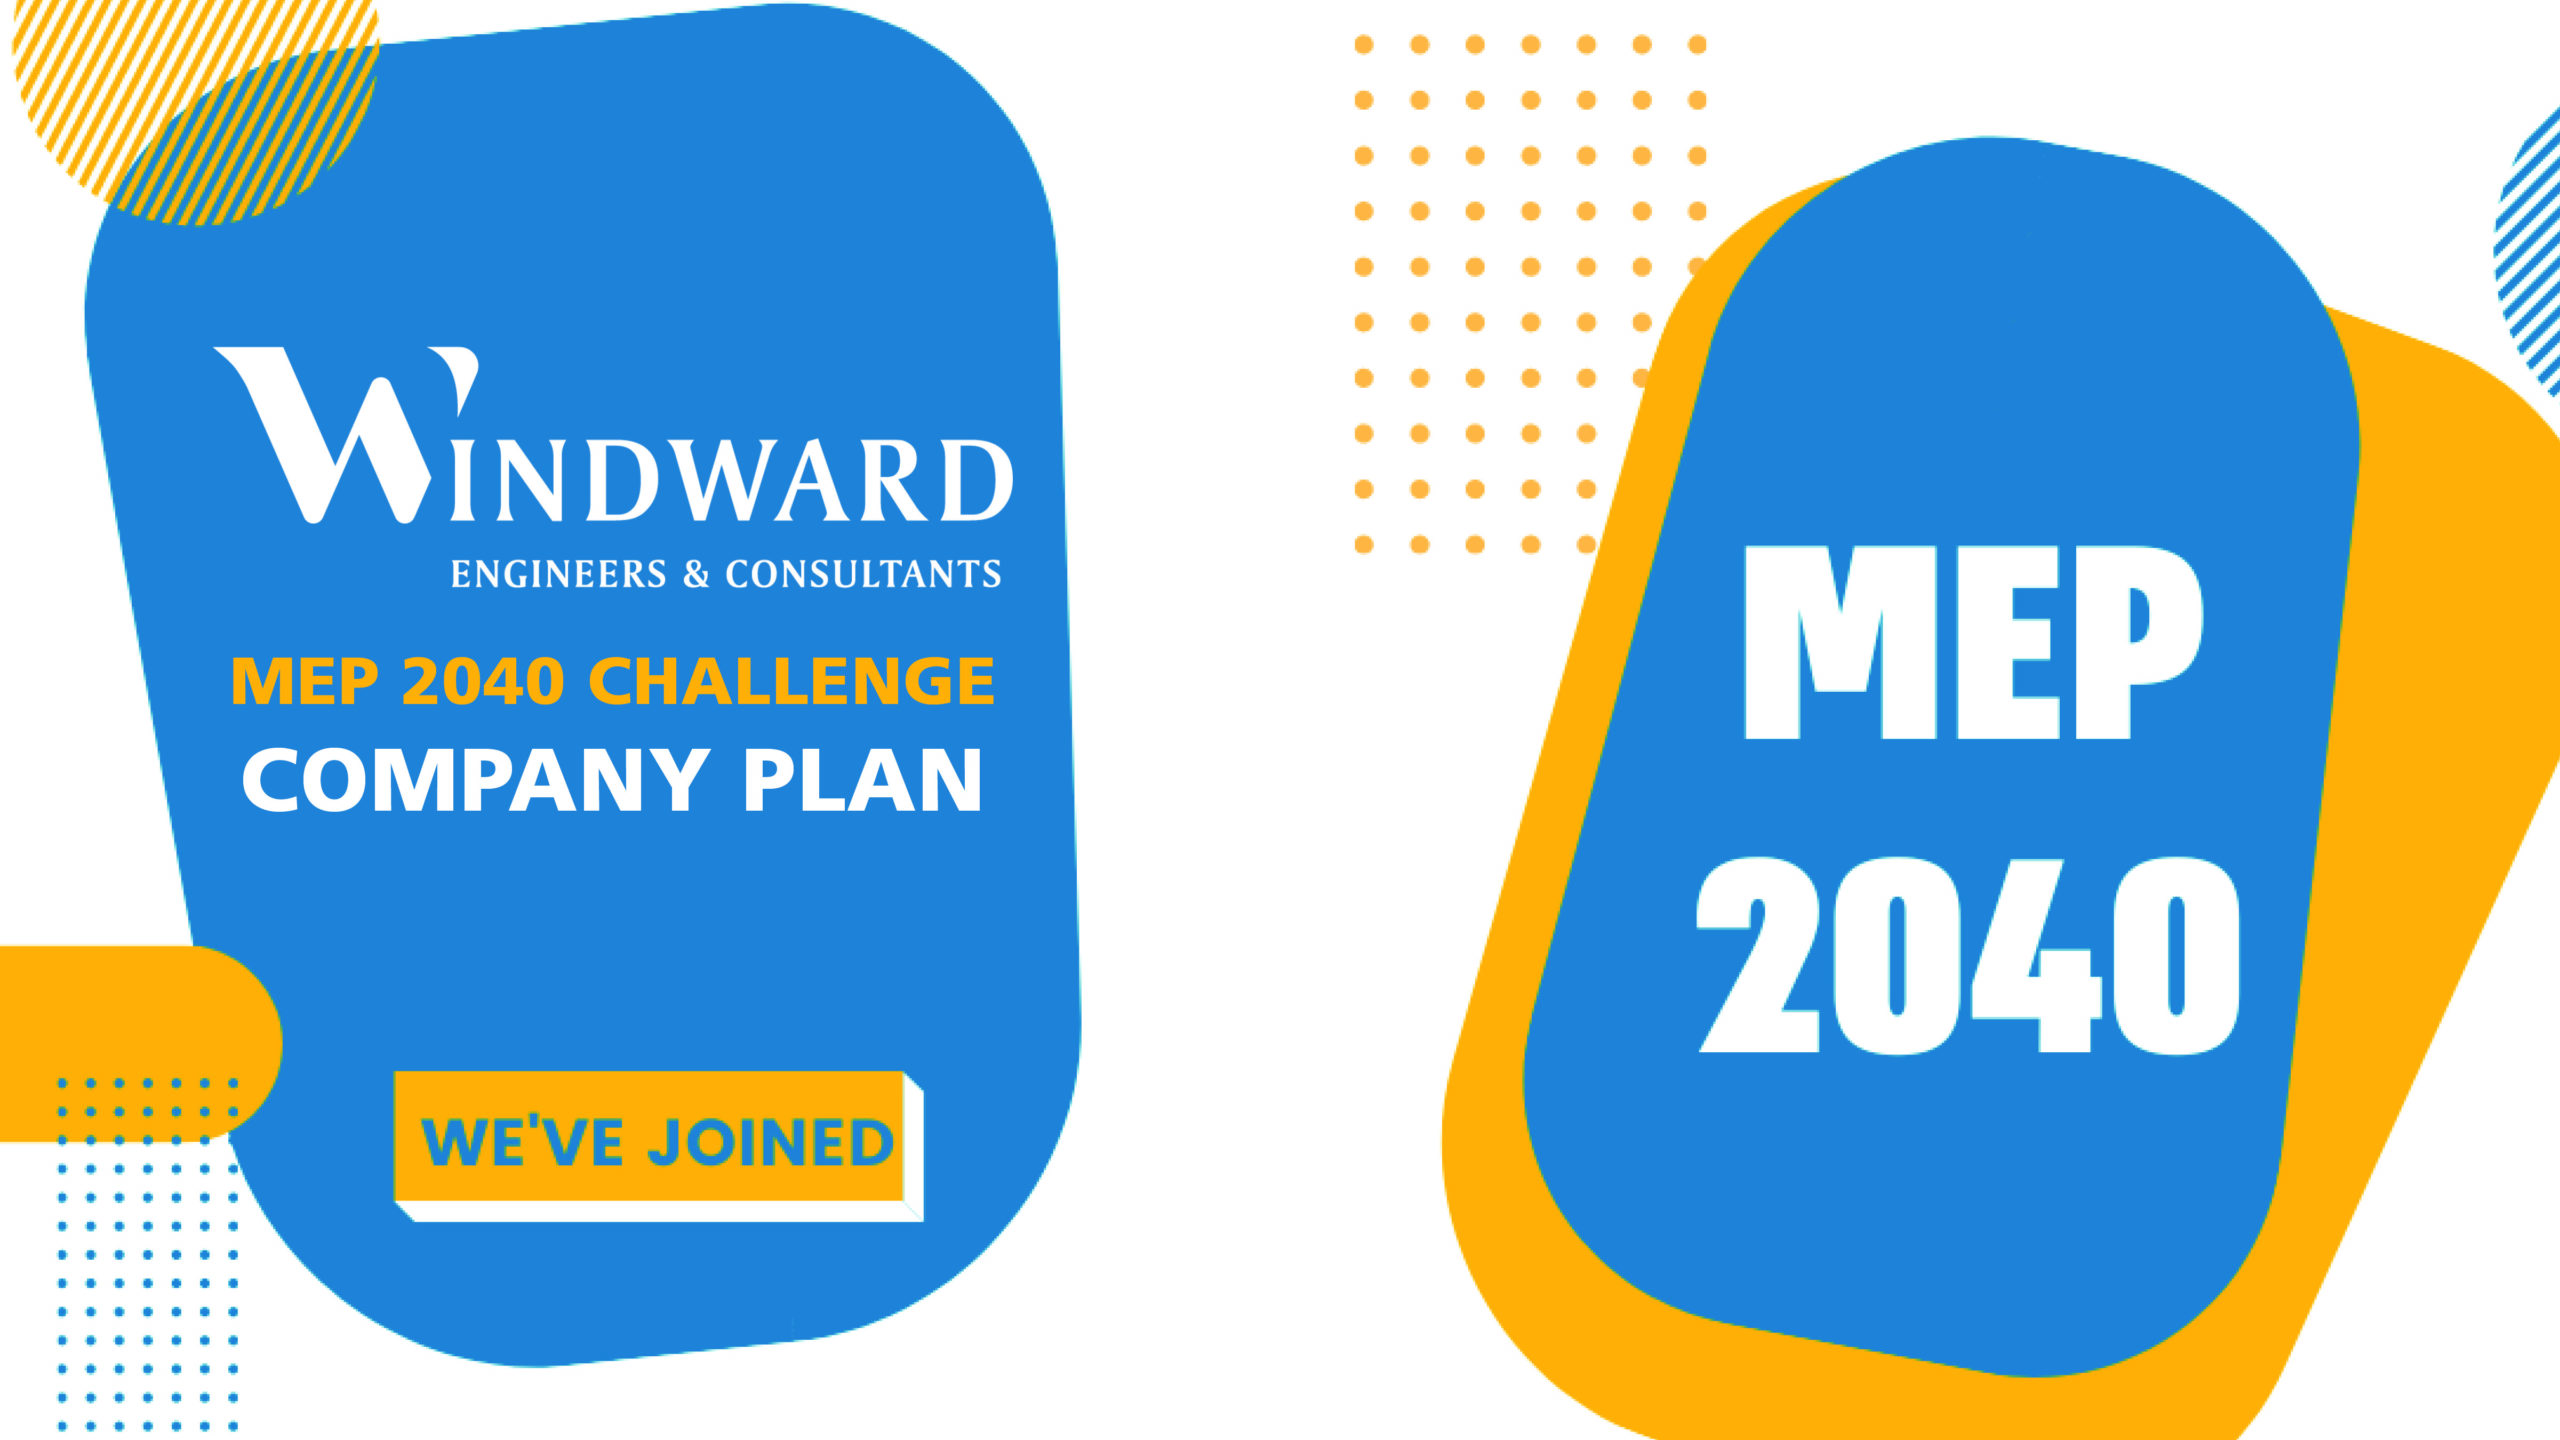 Windward Engineers & Consultants MEP2040 Company Plan